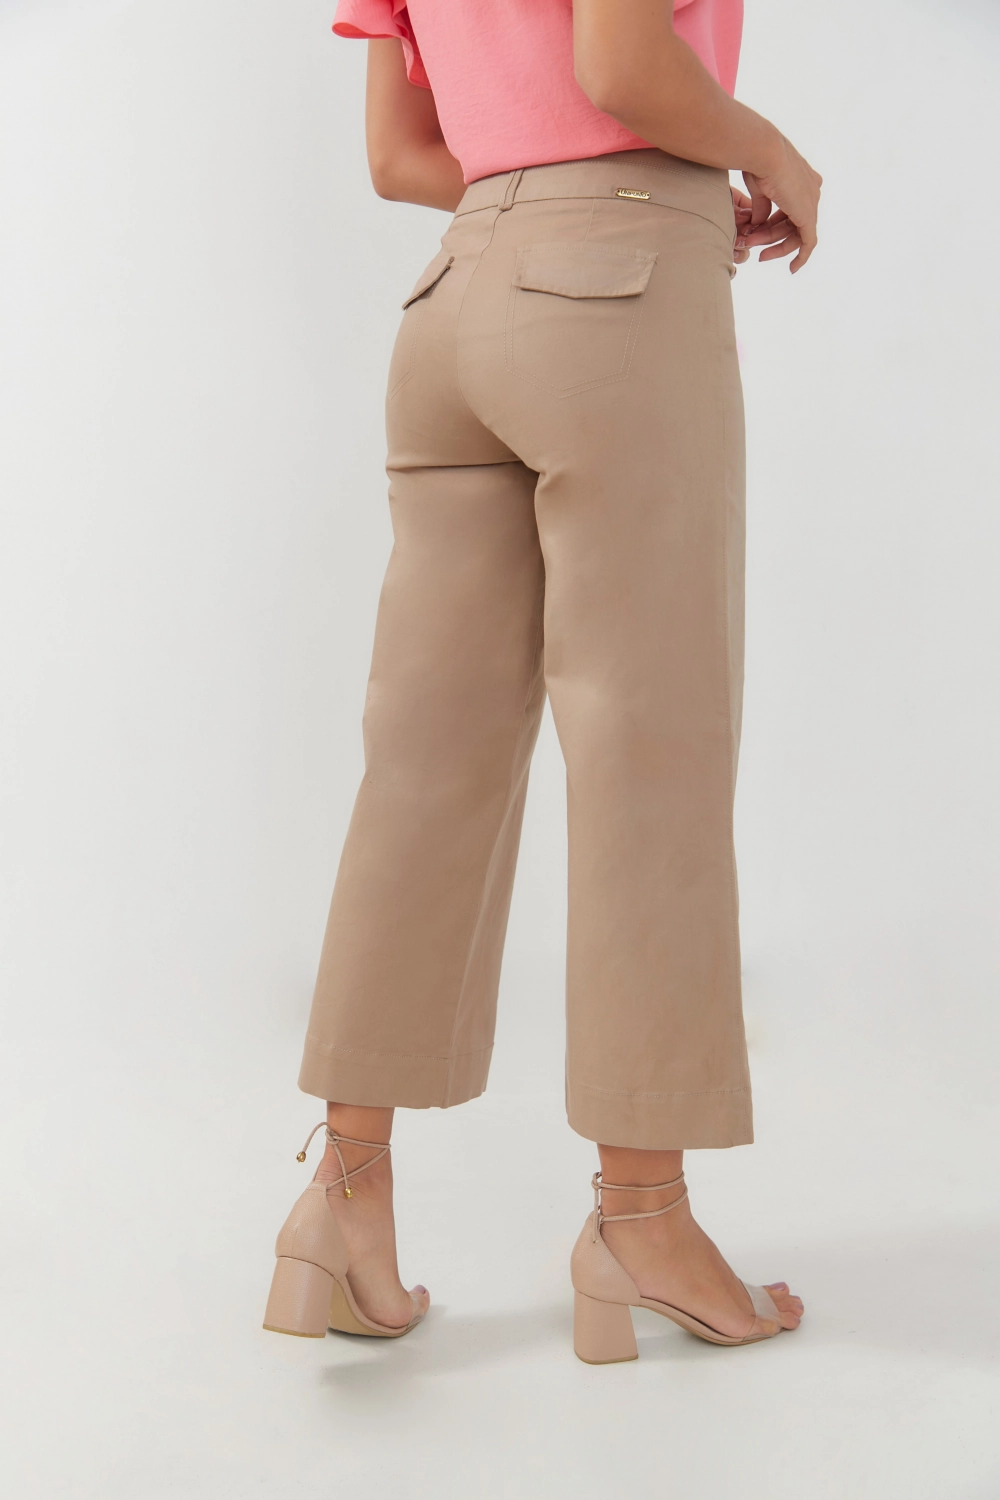 Pantalón cropped en dril pretina ancha. Kaki talla 8